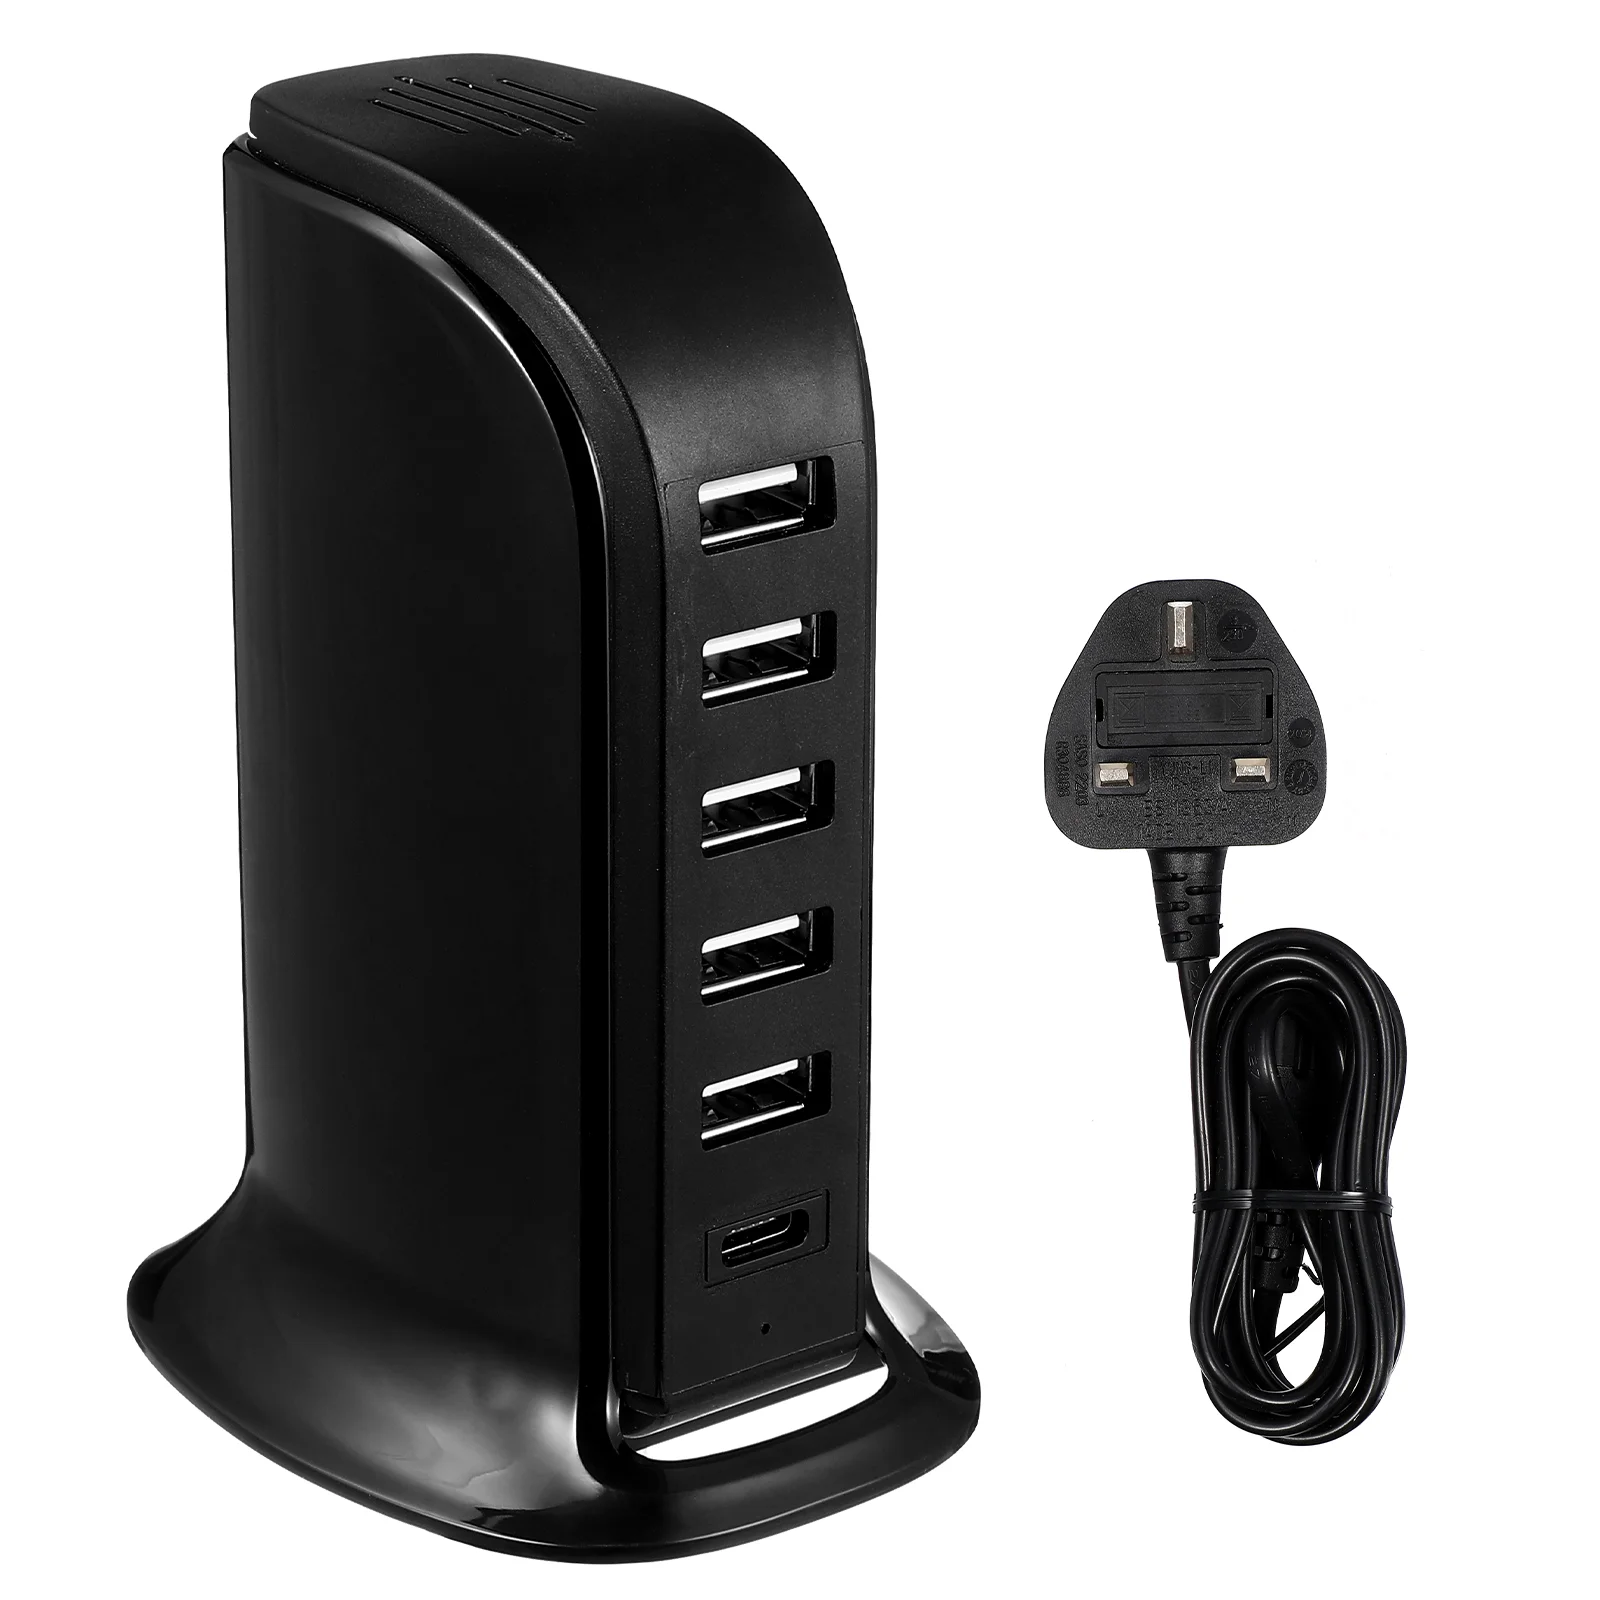 

20W Multi Port USB Charger Rapid Charging Station Desktop Travel Hub with UK Plug White Black